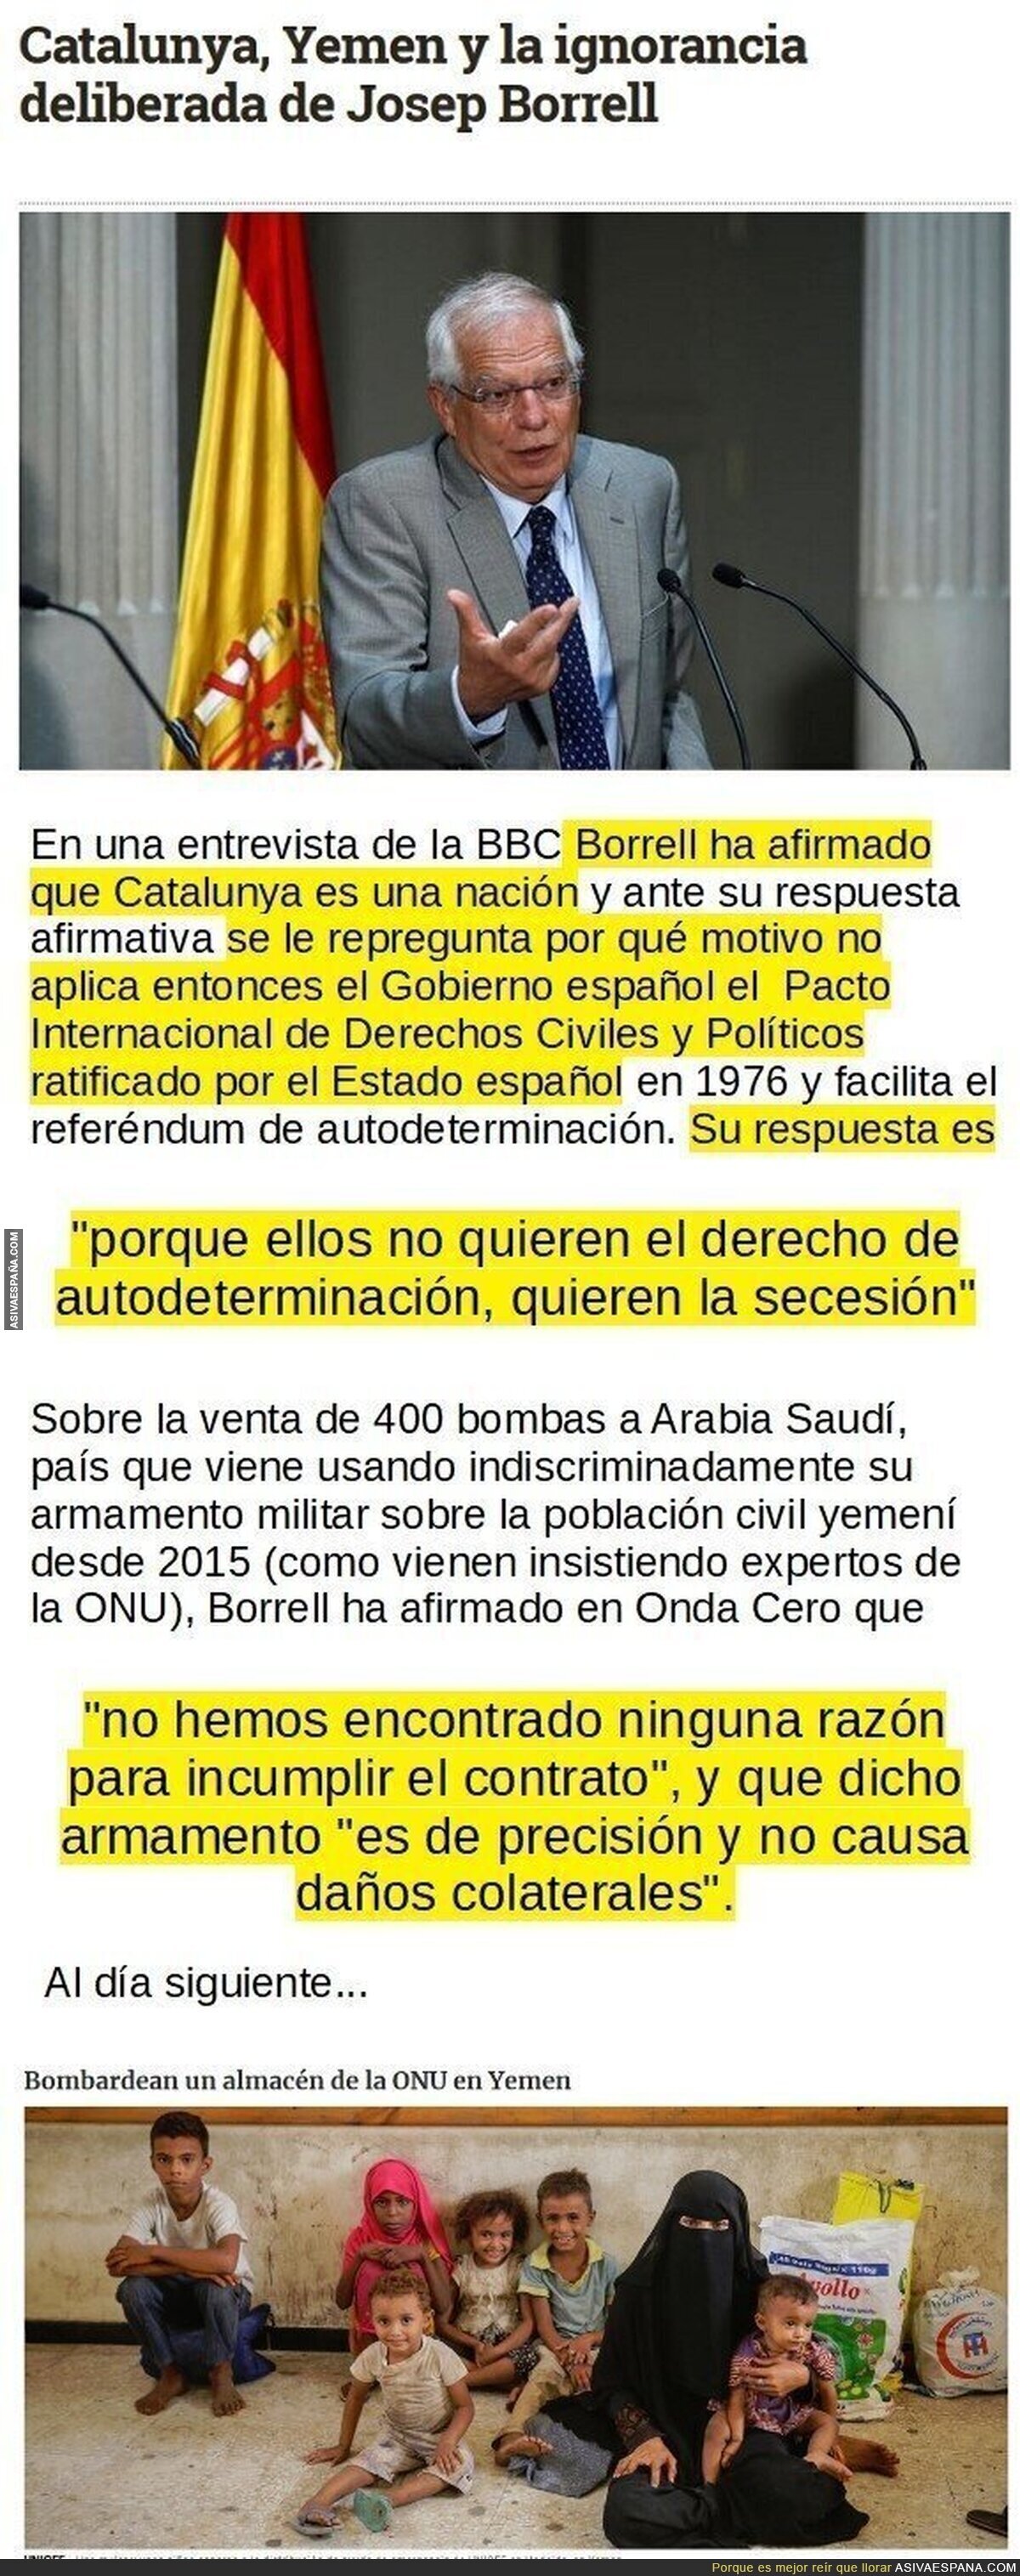 La semana de Josep Borrell